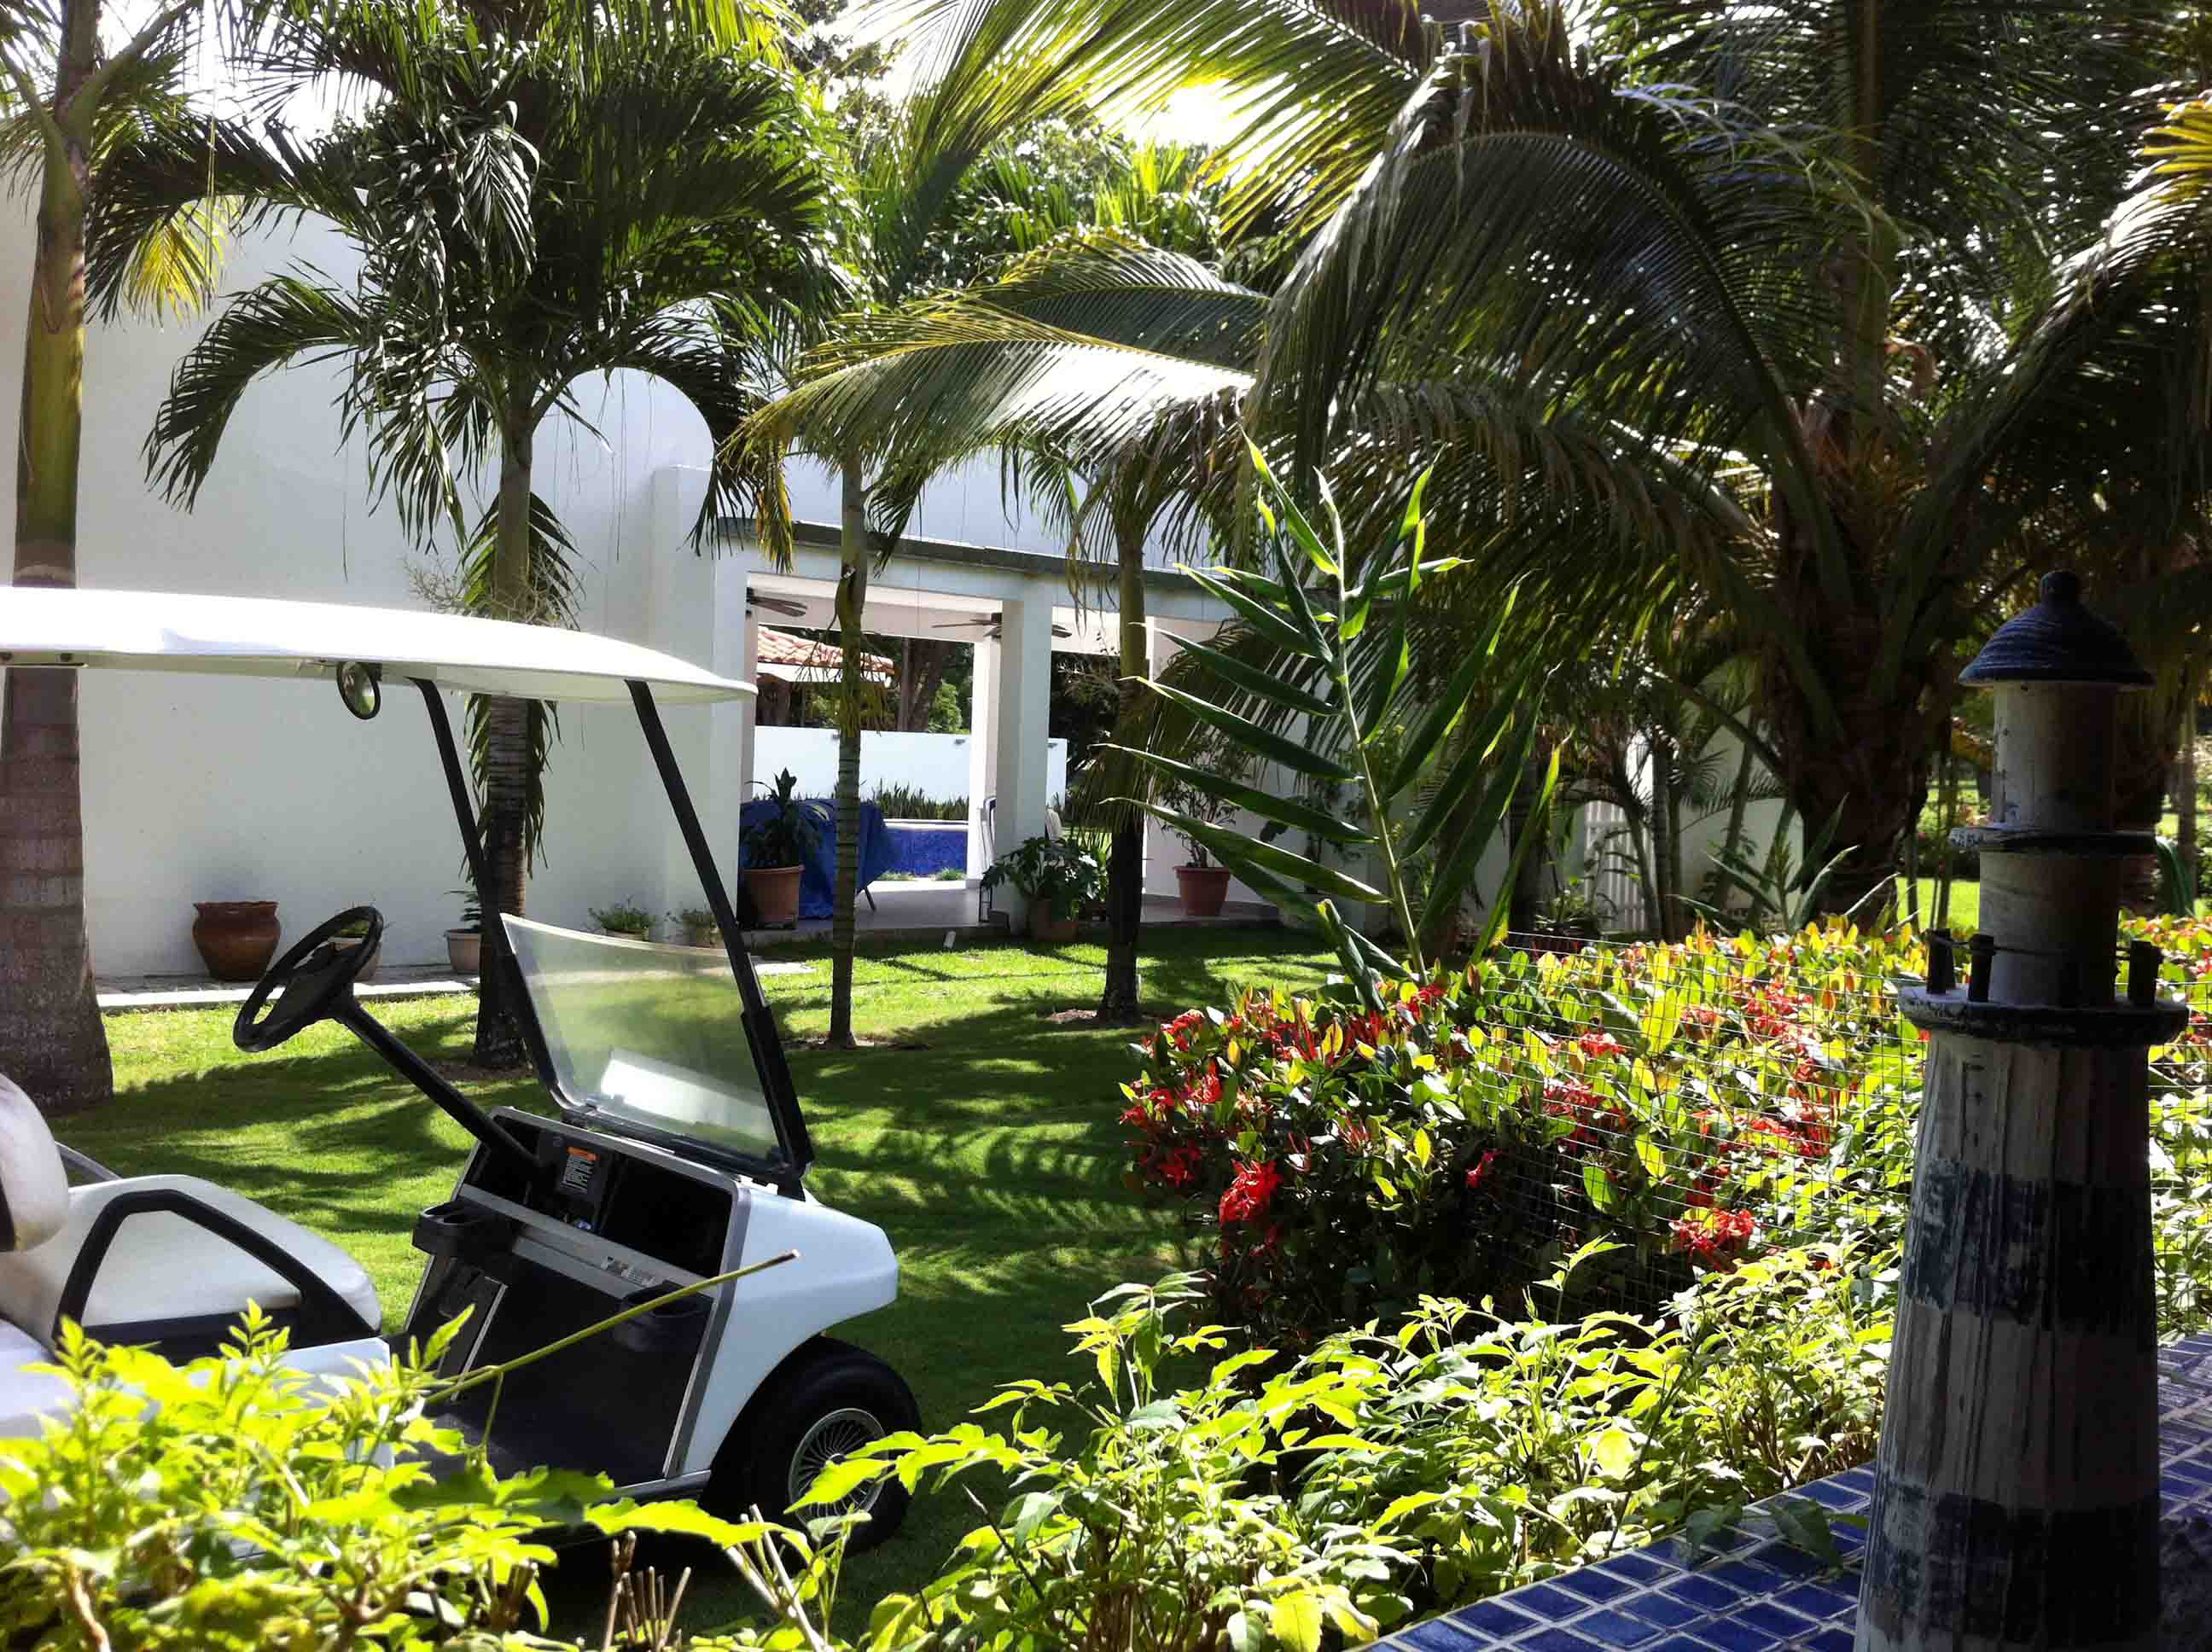 Coronado Panama – Dream Retirement Spot? Affordable, Safe, Golf & Beaches!